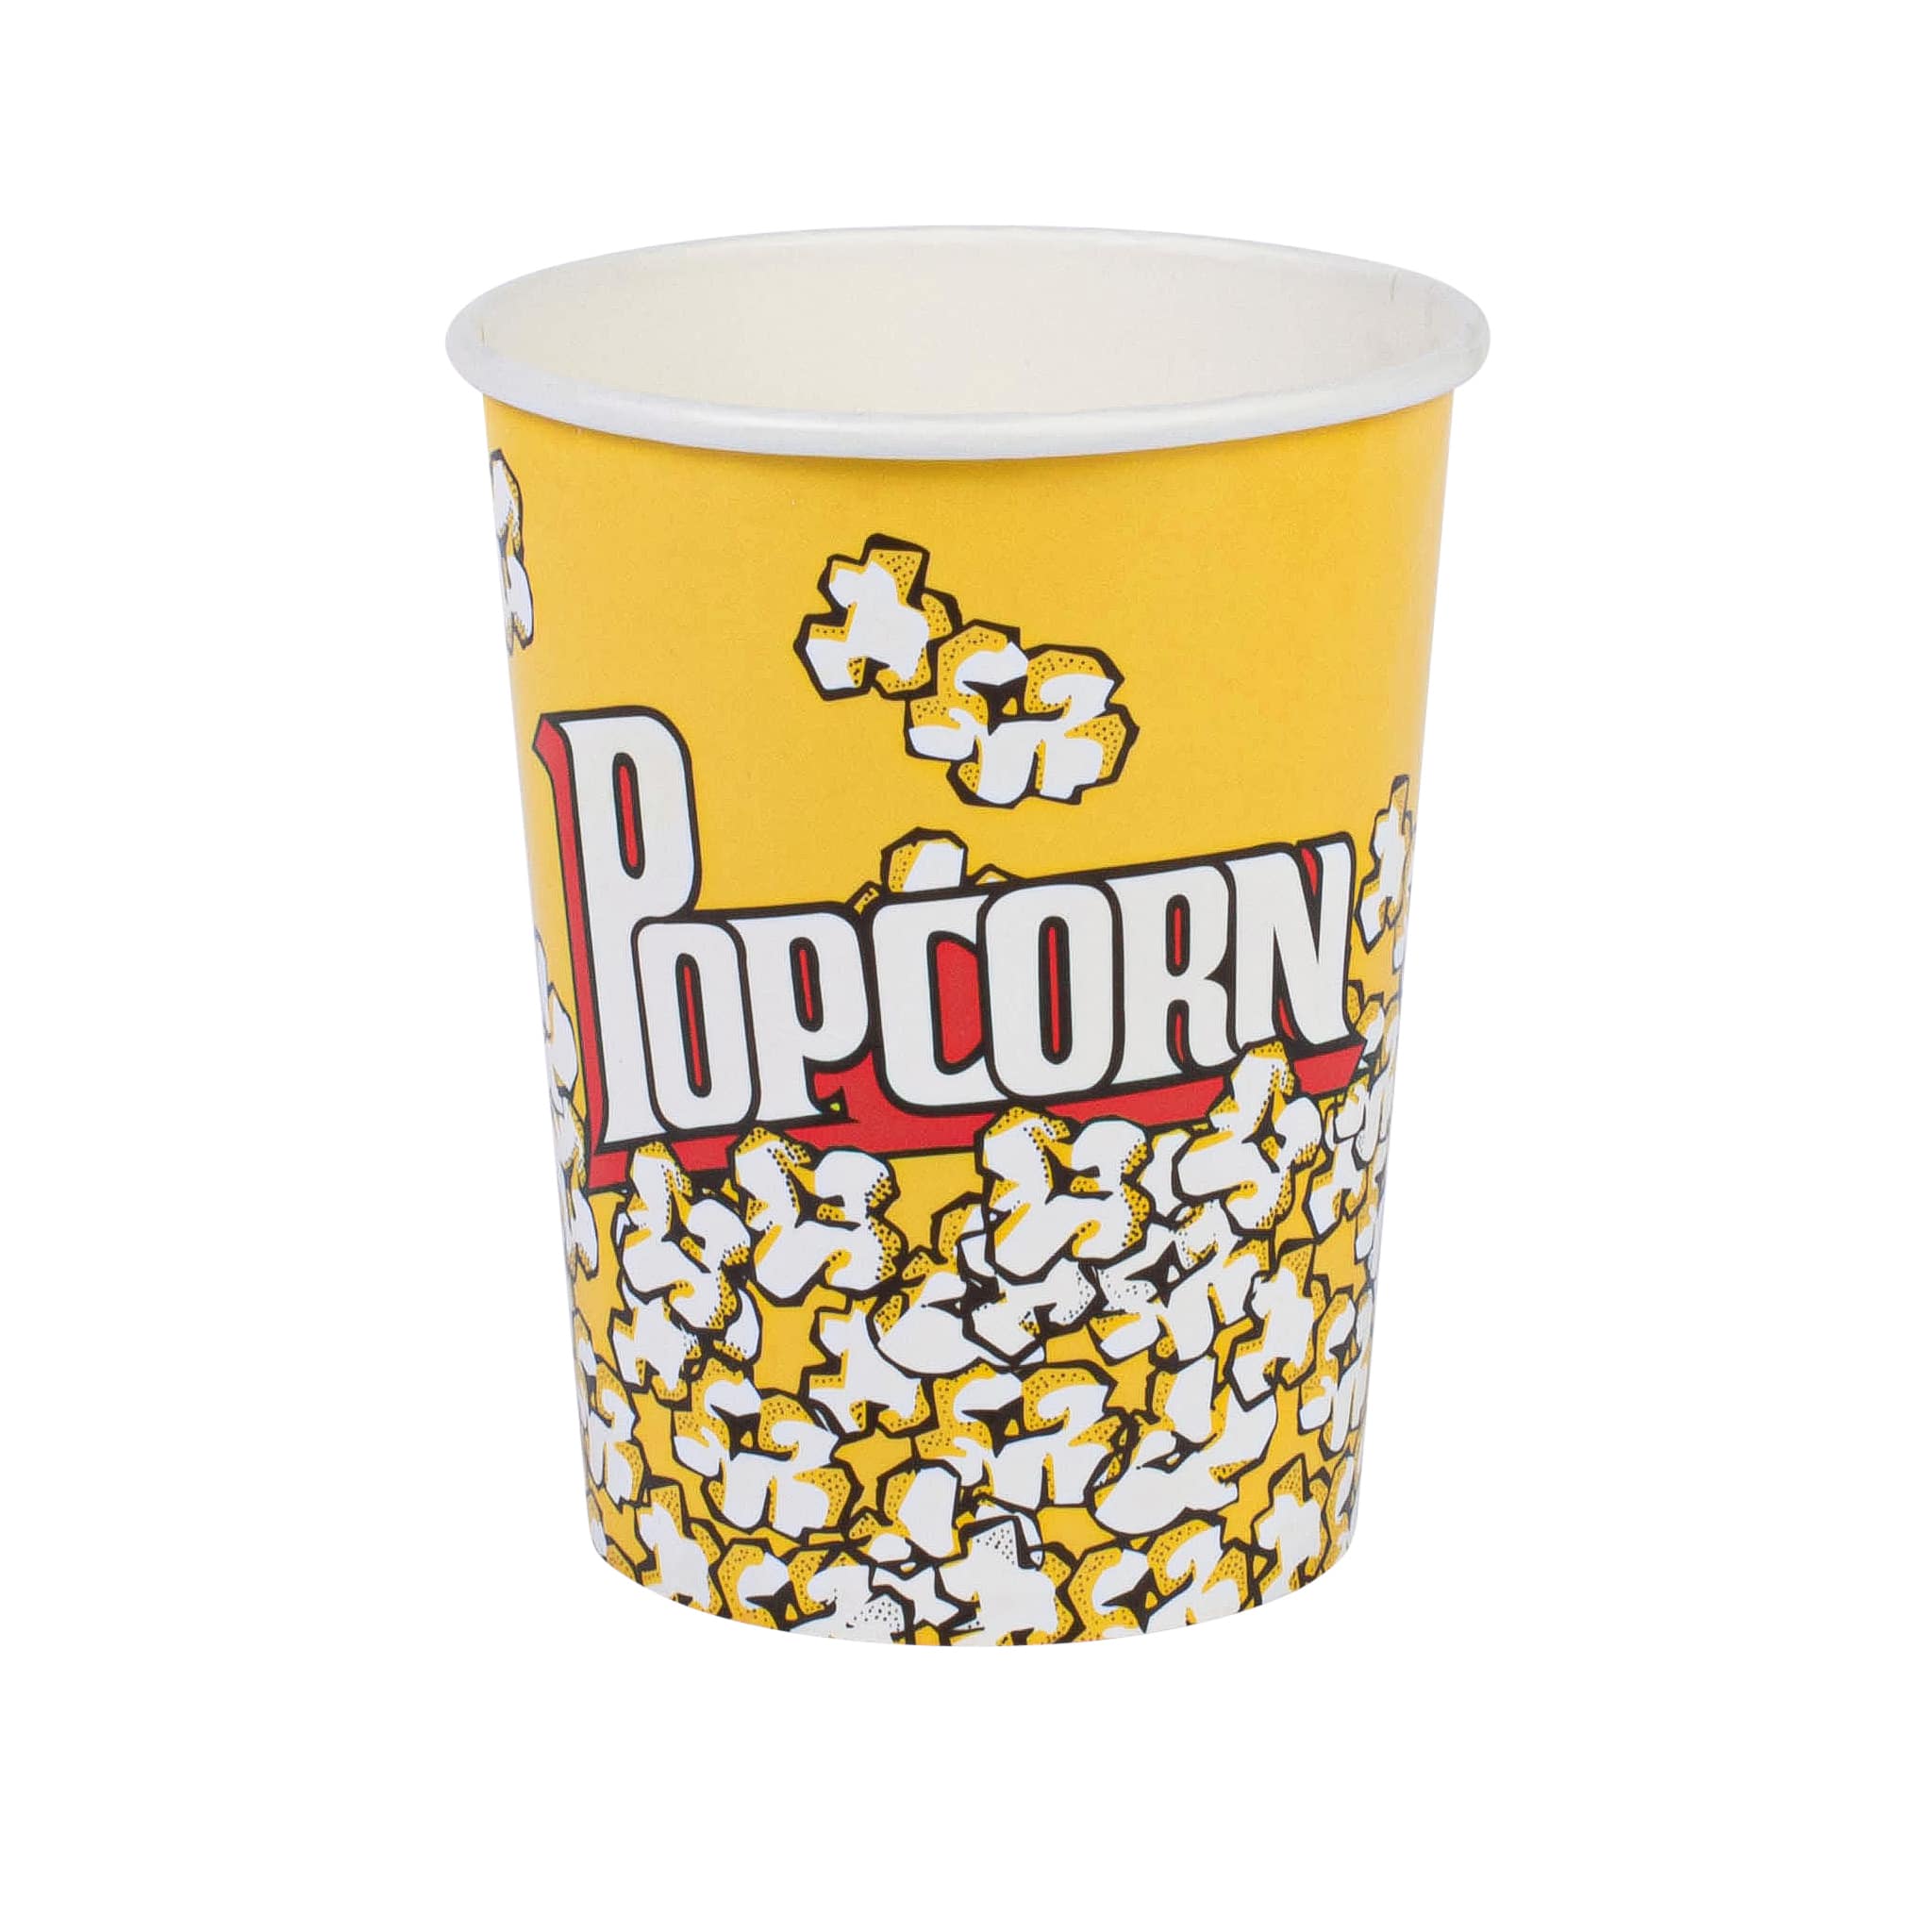 32oz Cinema-Style Popcorn Tubs